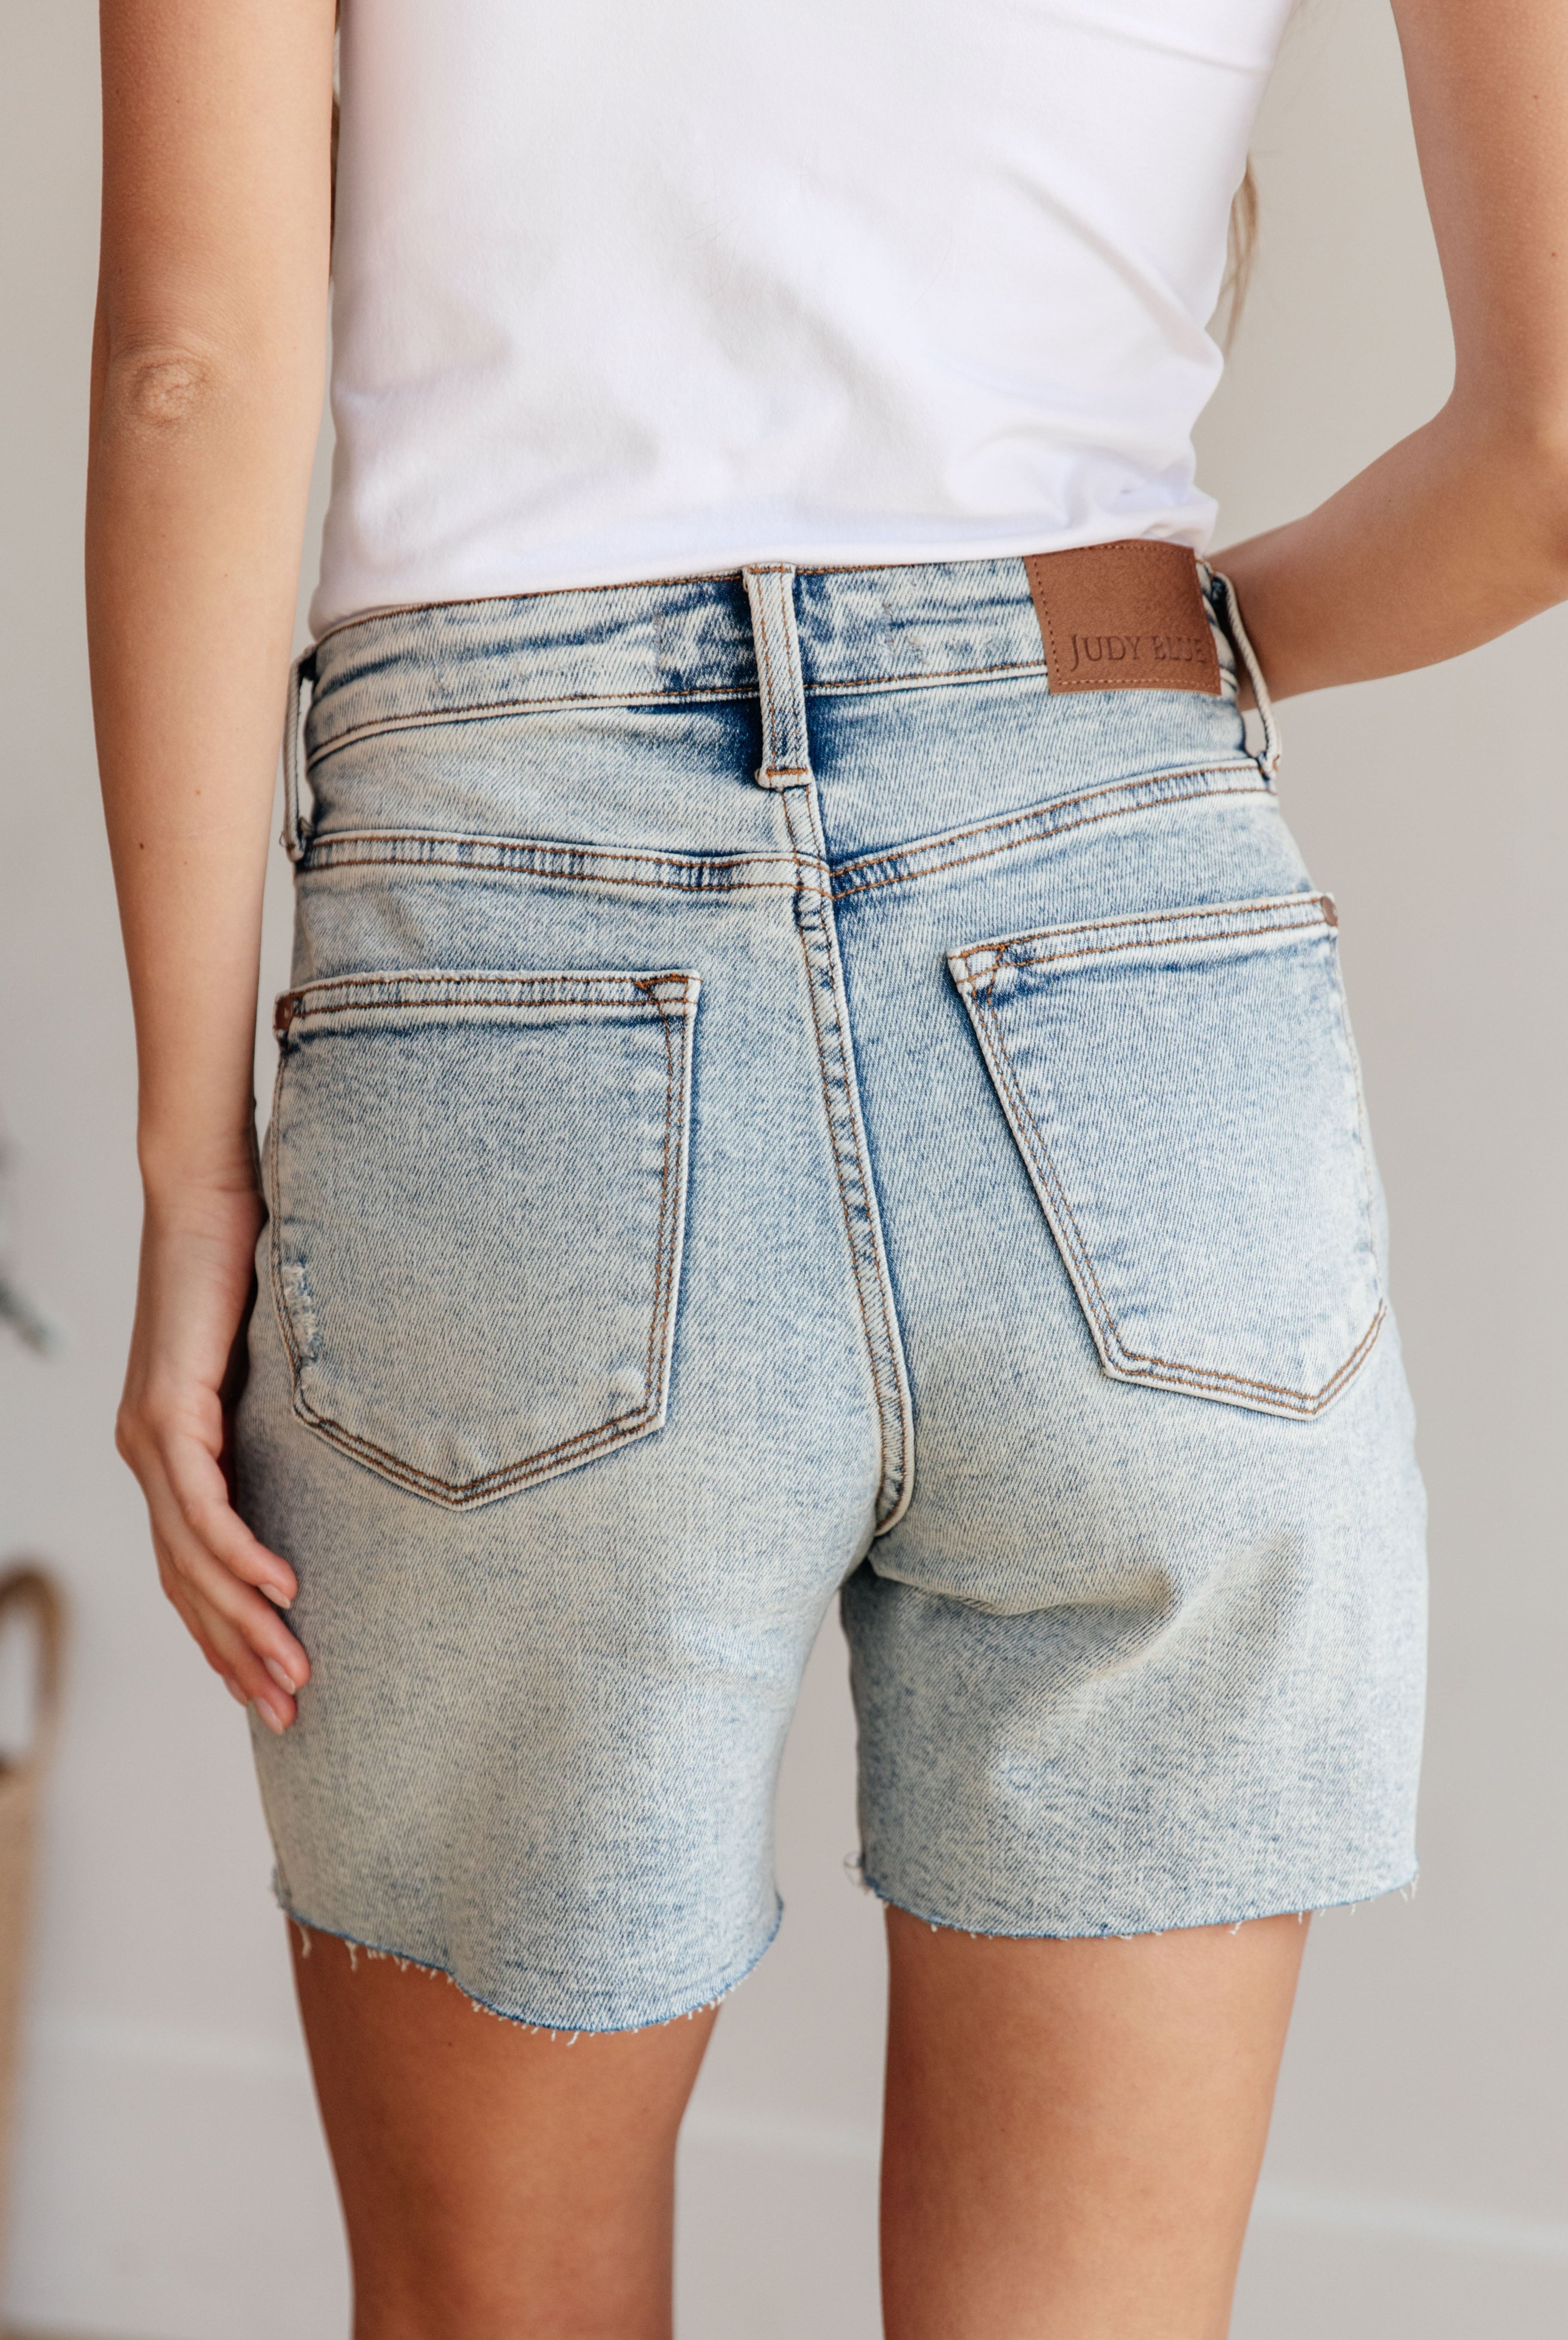 JUDY BLUE Cindy High Rise Mineral Wash Distressed Boyfriend Shorts-Shorts-Krush Kandy, Women's Online Fashion Boutique Located in Phoenix, Arizona (Scottsdale Area)